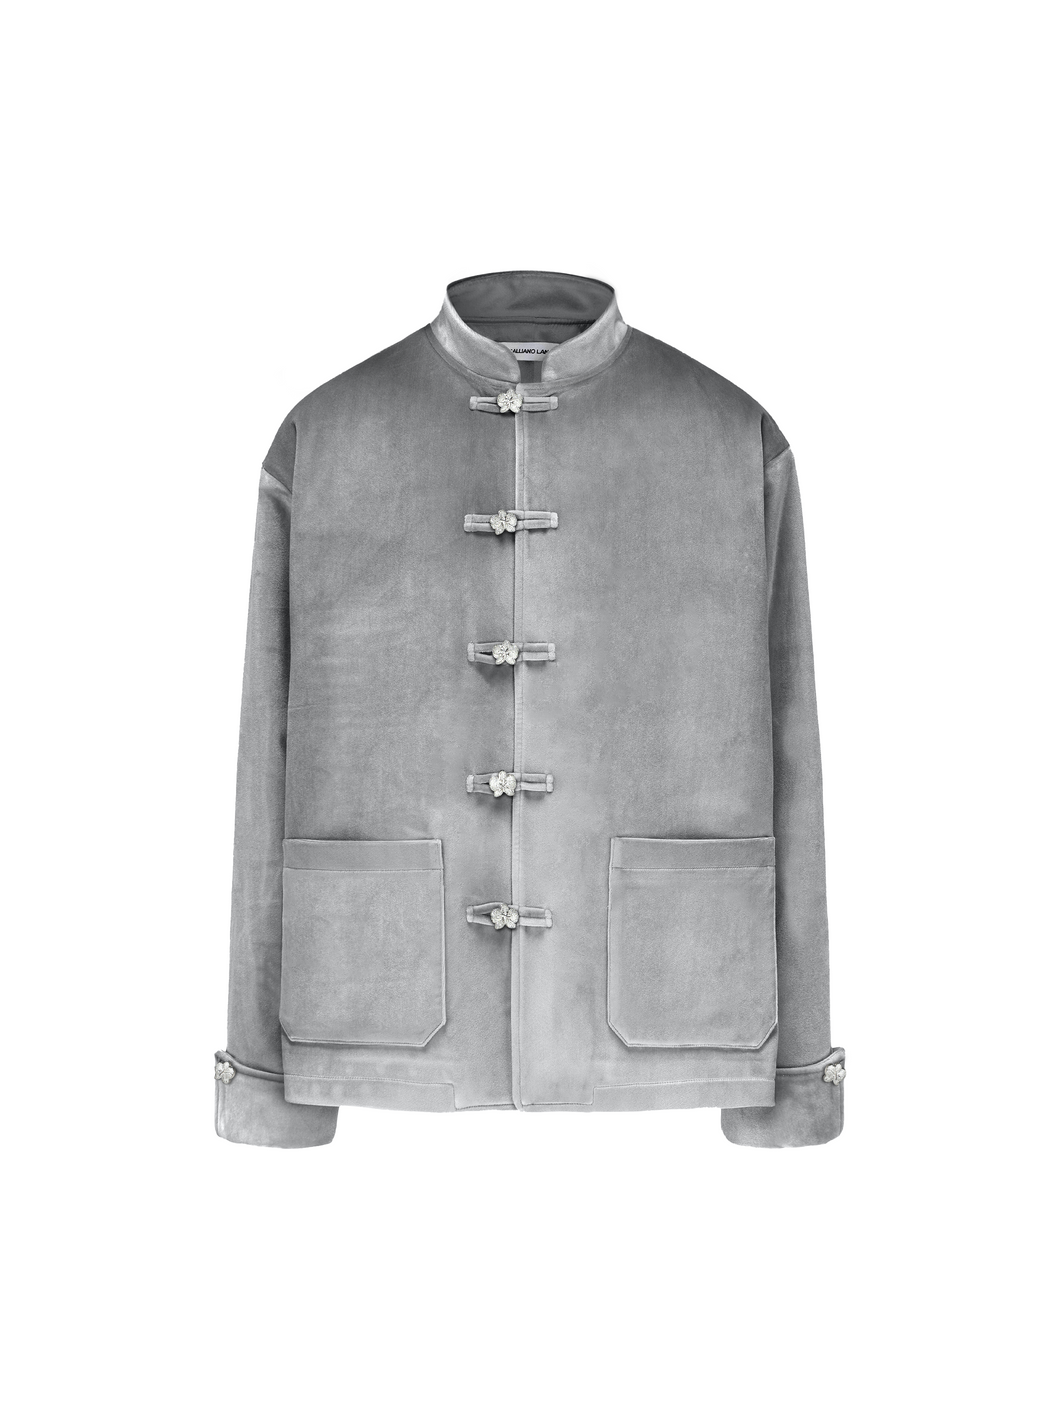 Jewel Button Mercury Gray Velvet Tang Suit Jacket